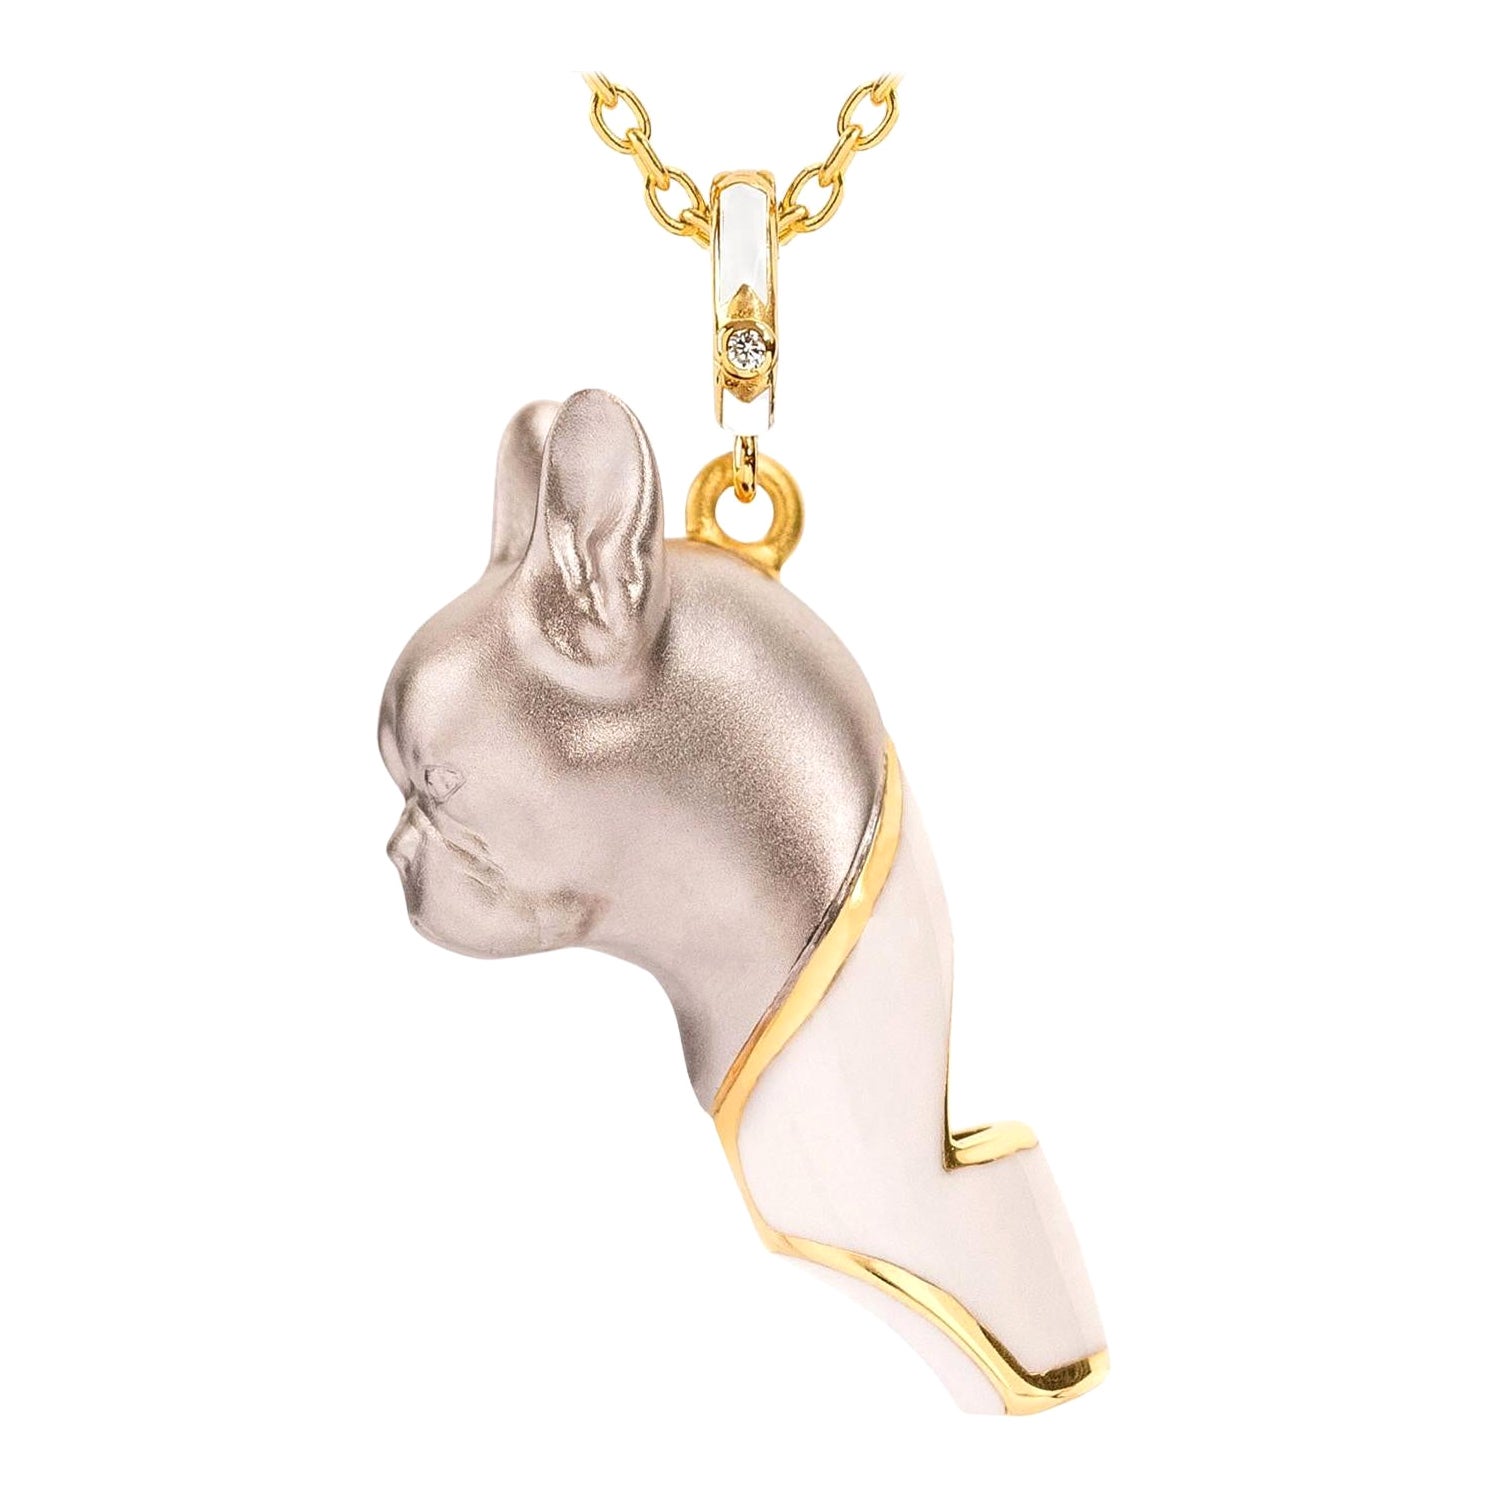 Naimah, French Bulldog Whistle Pendant Necklace, White Enamel